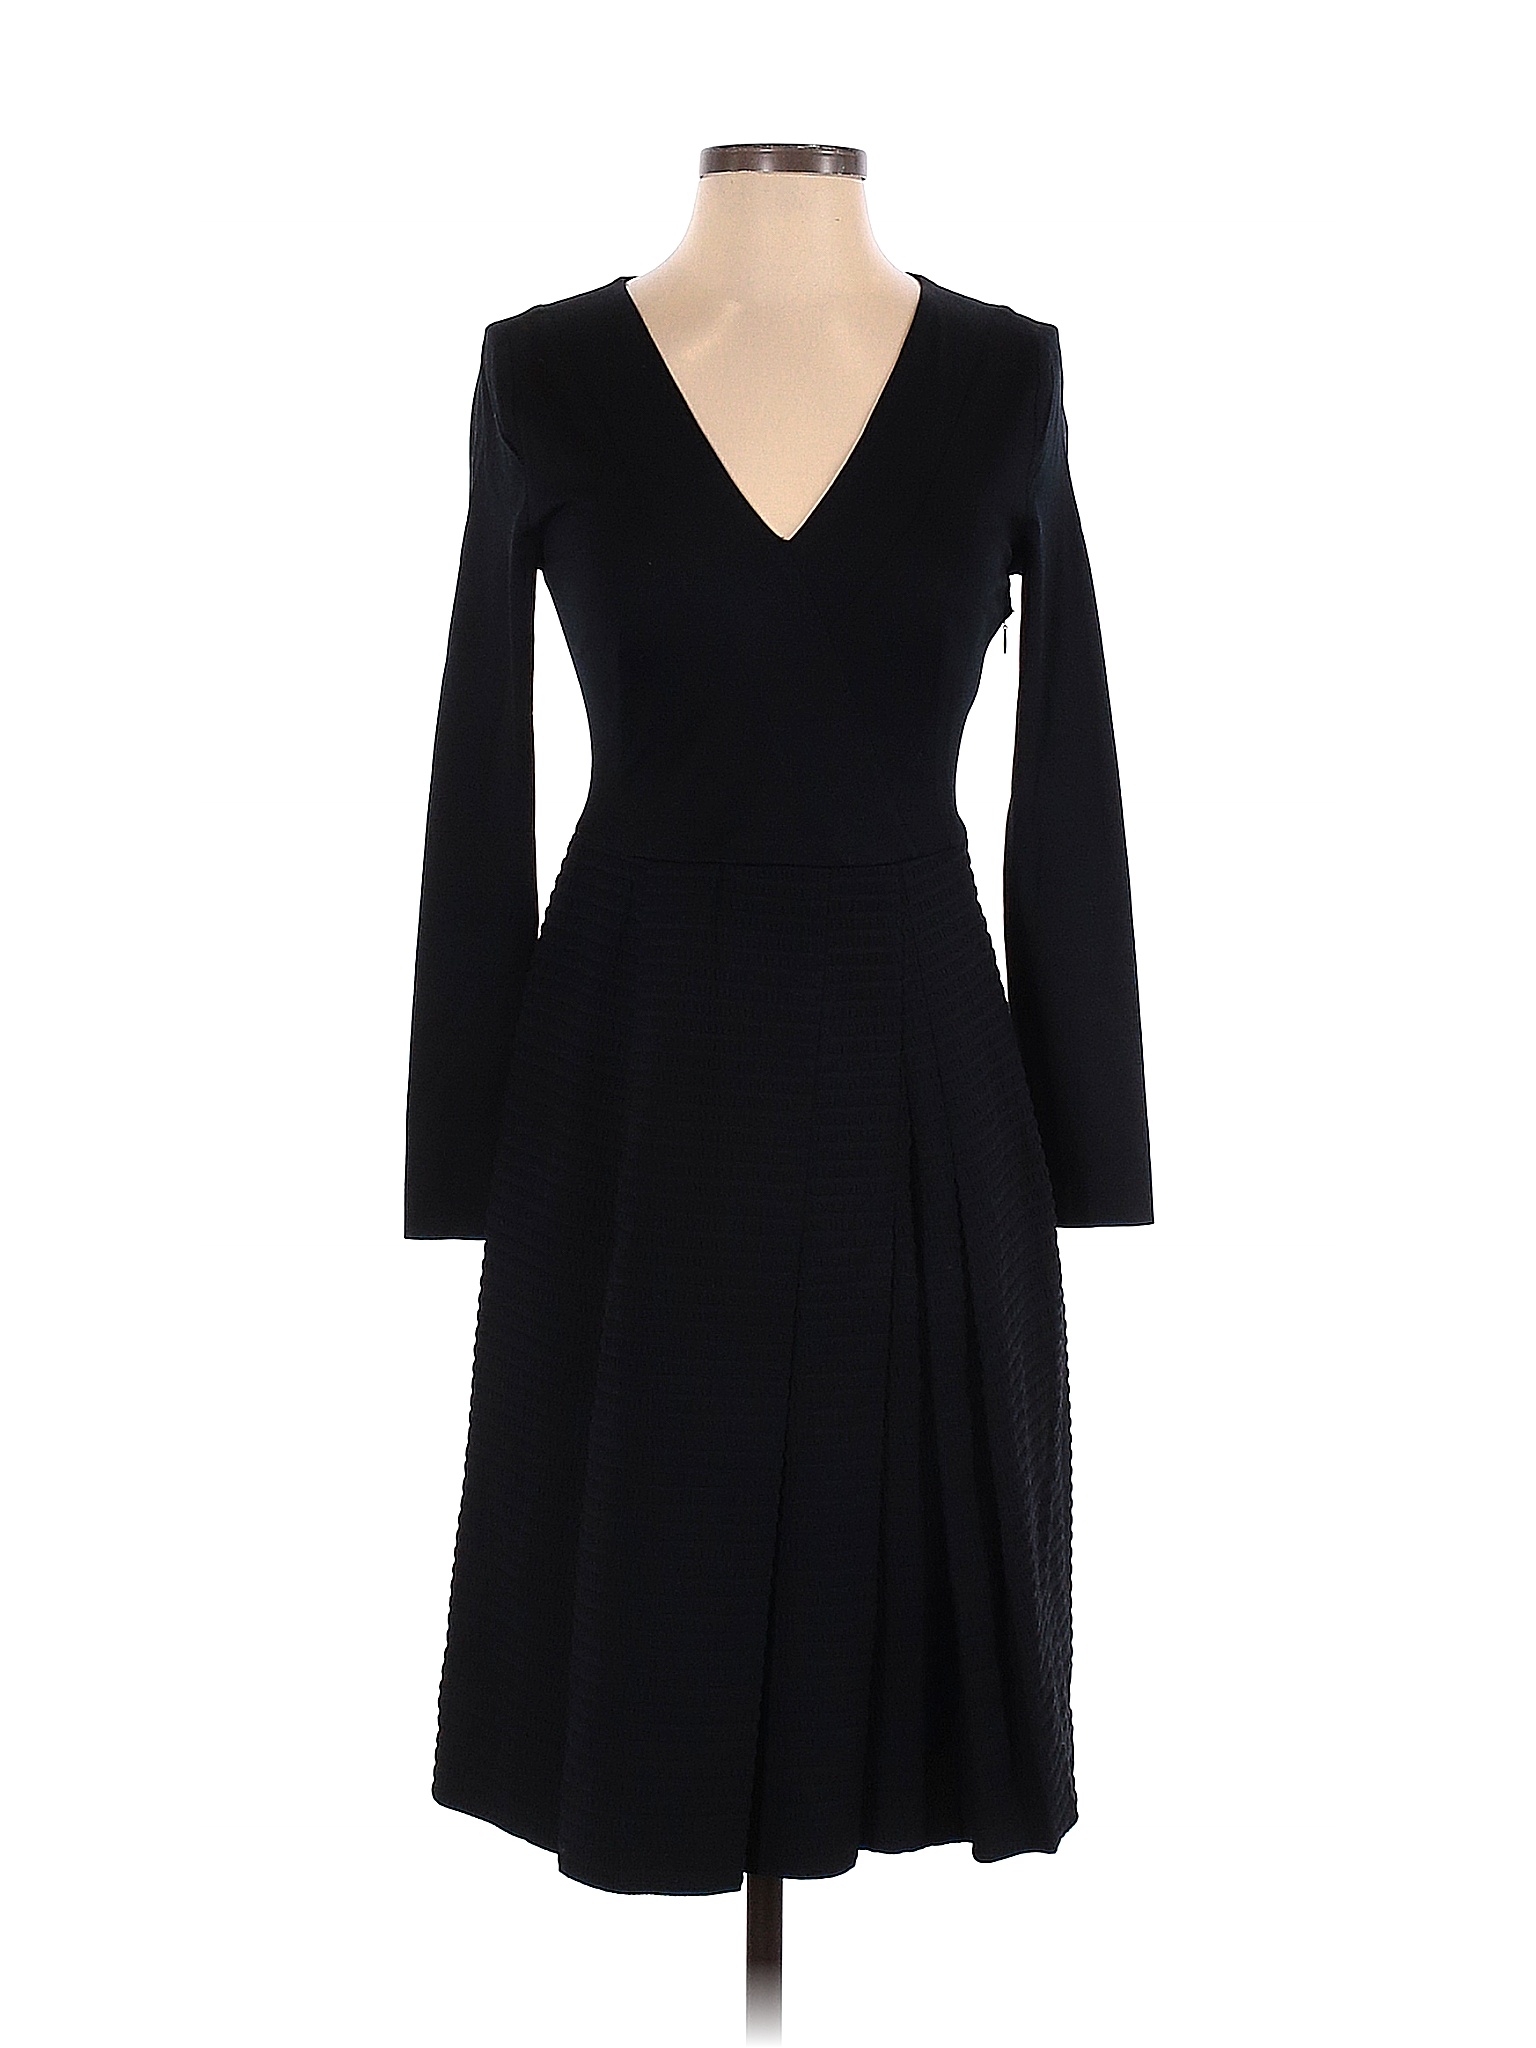 AKRIS Solid Black Cocktail Dress Size 4 - 90% off | thredUP